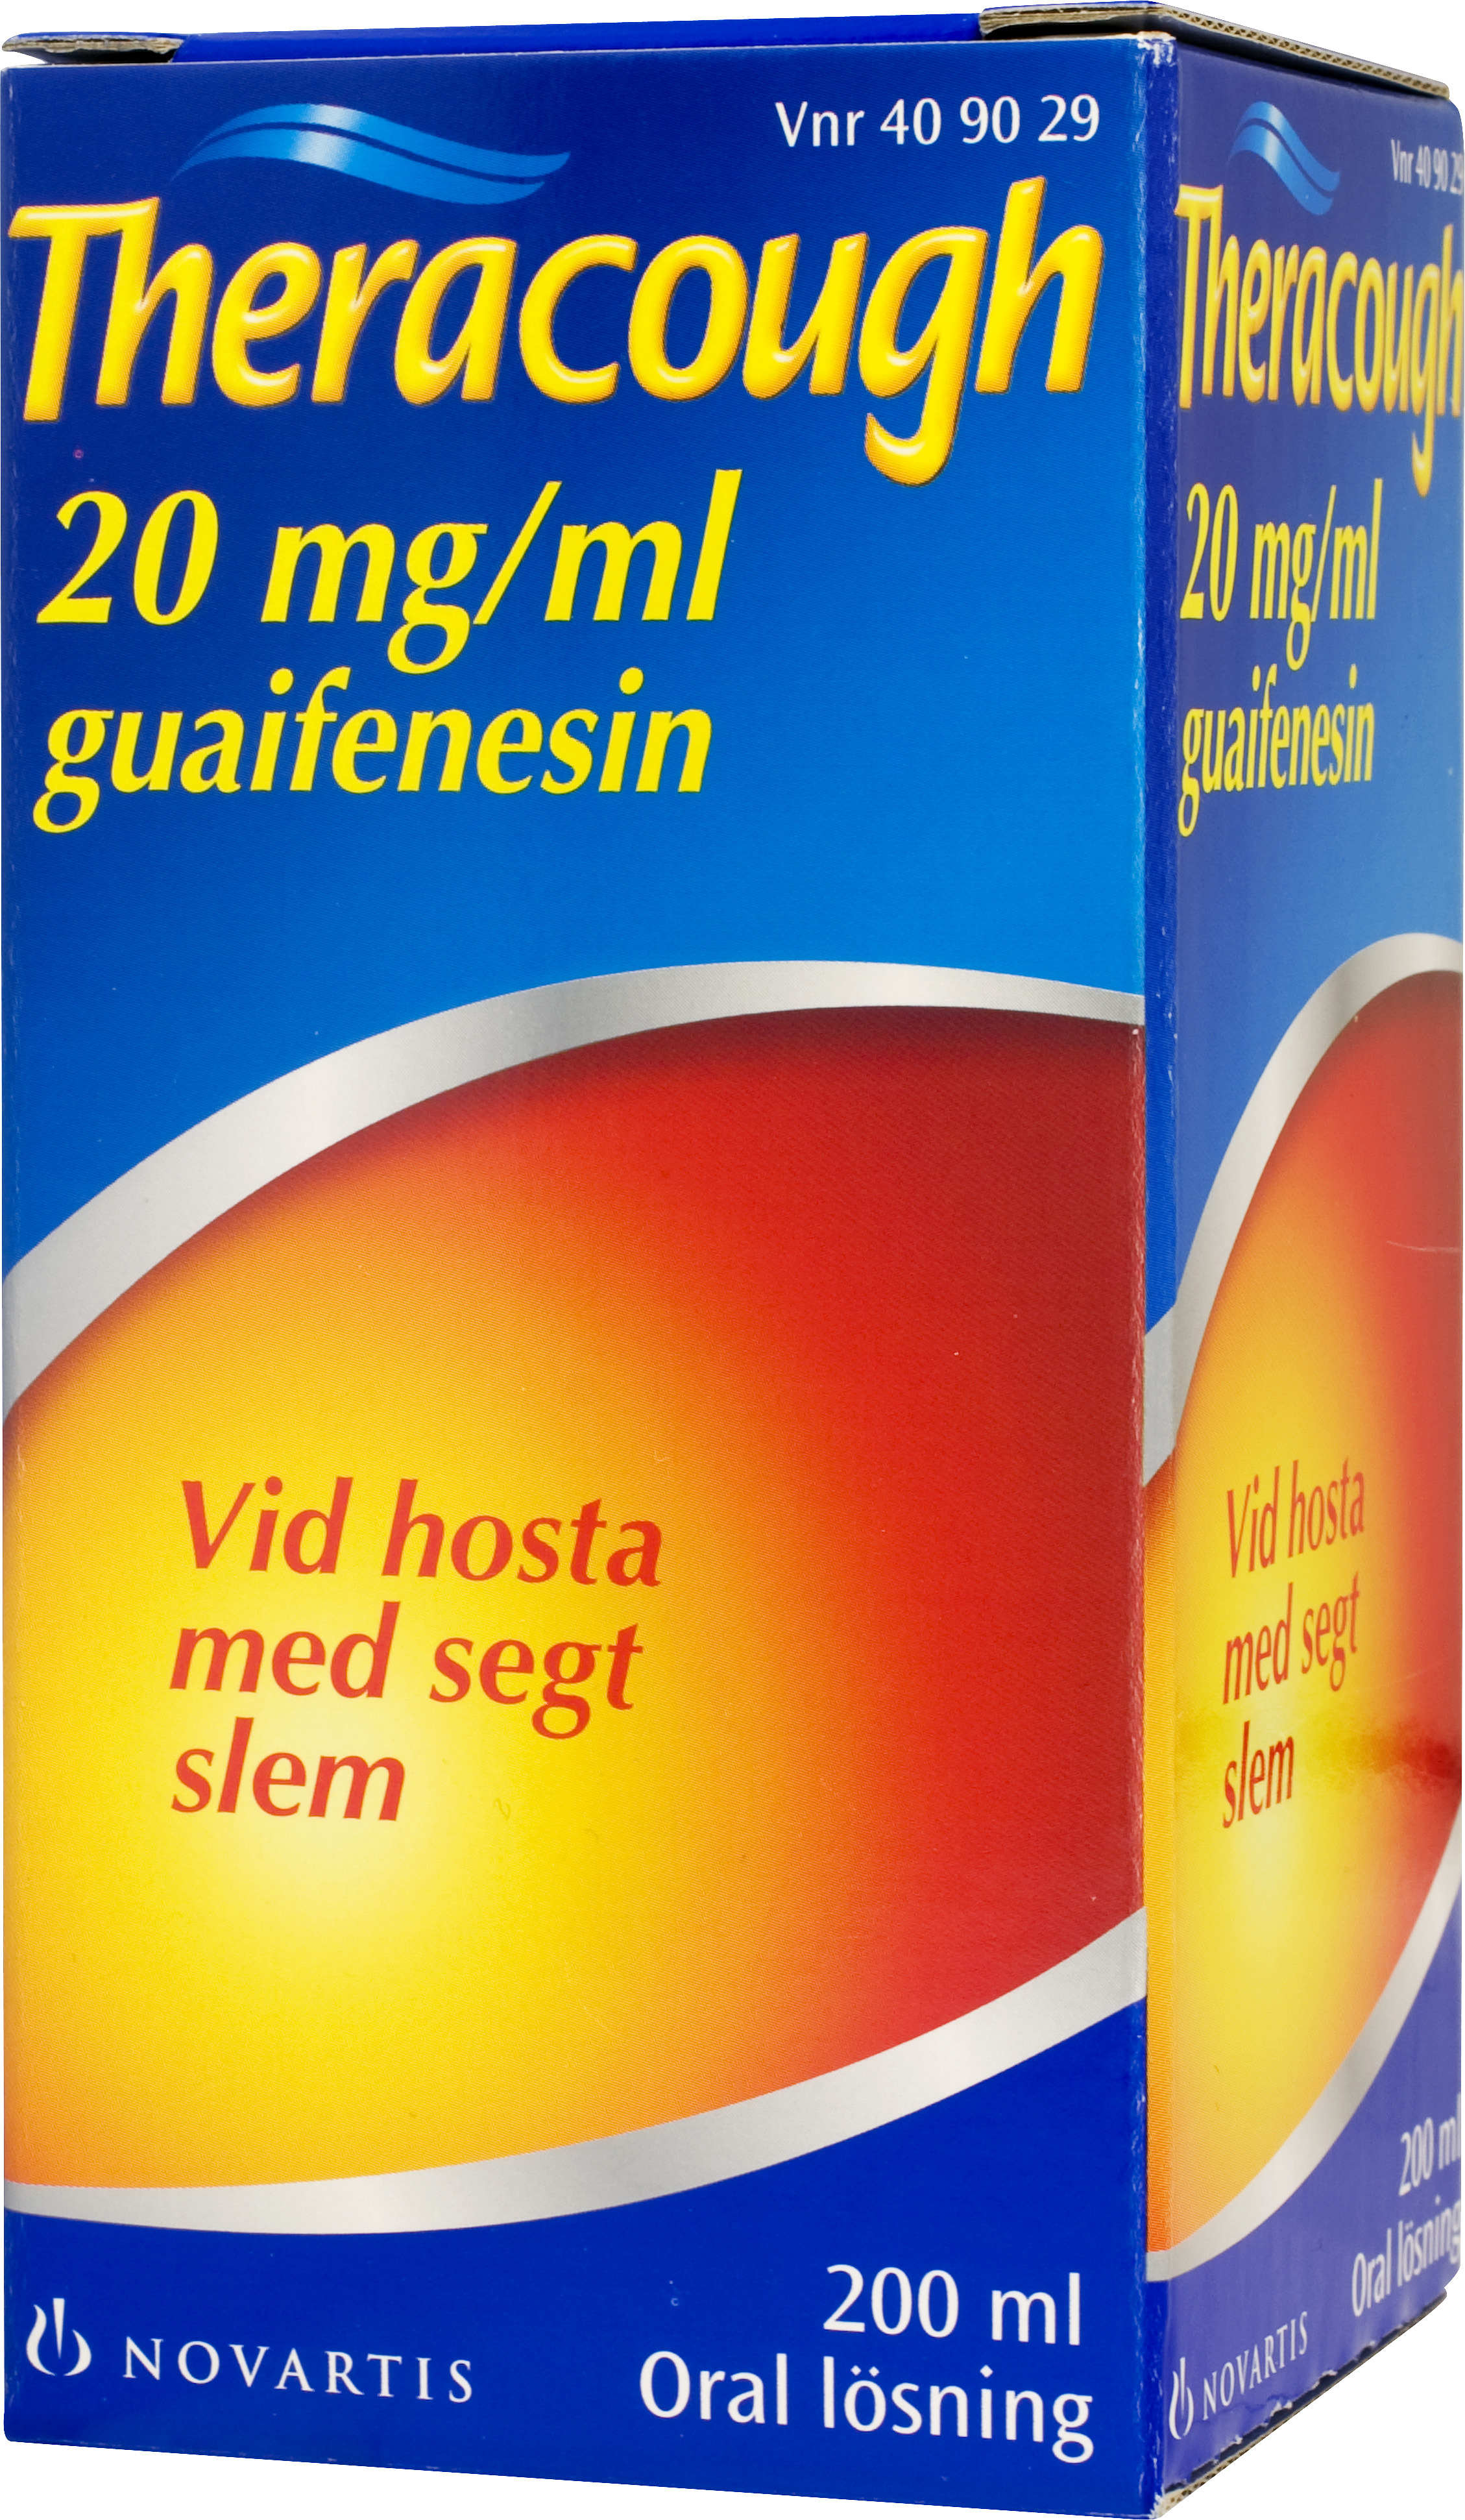 Theracough Oral lösning 20 mg/ml 200ml